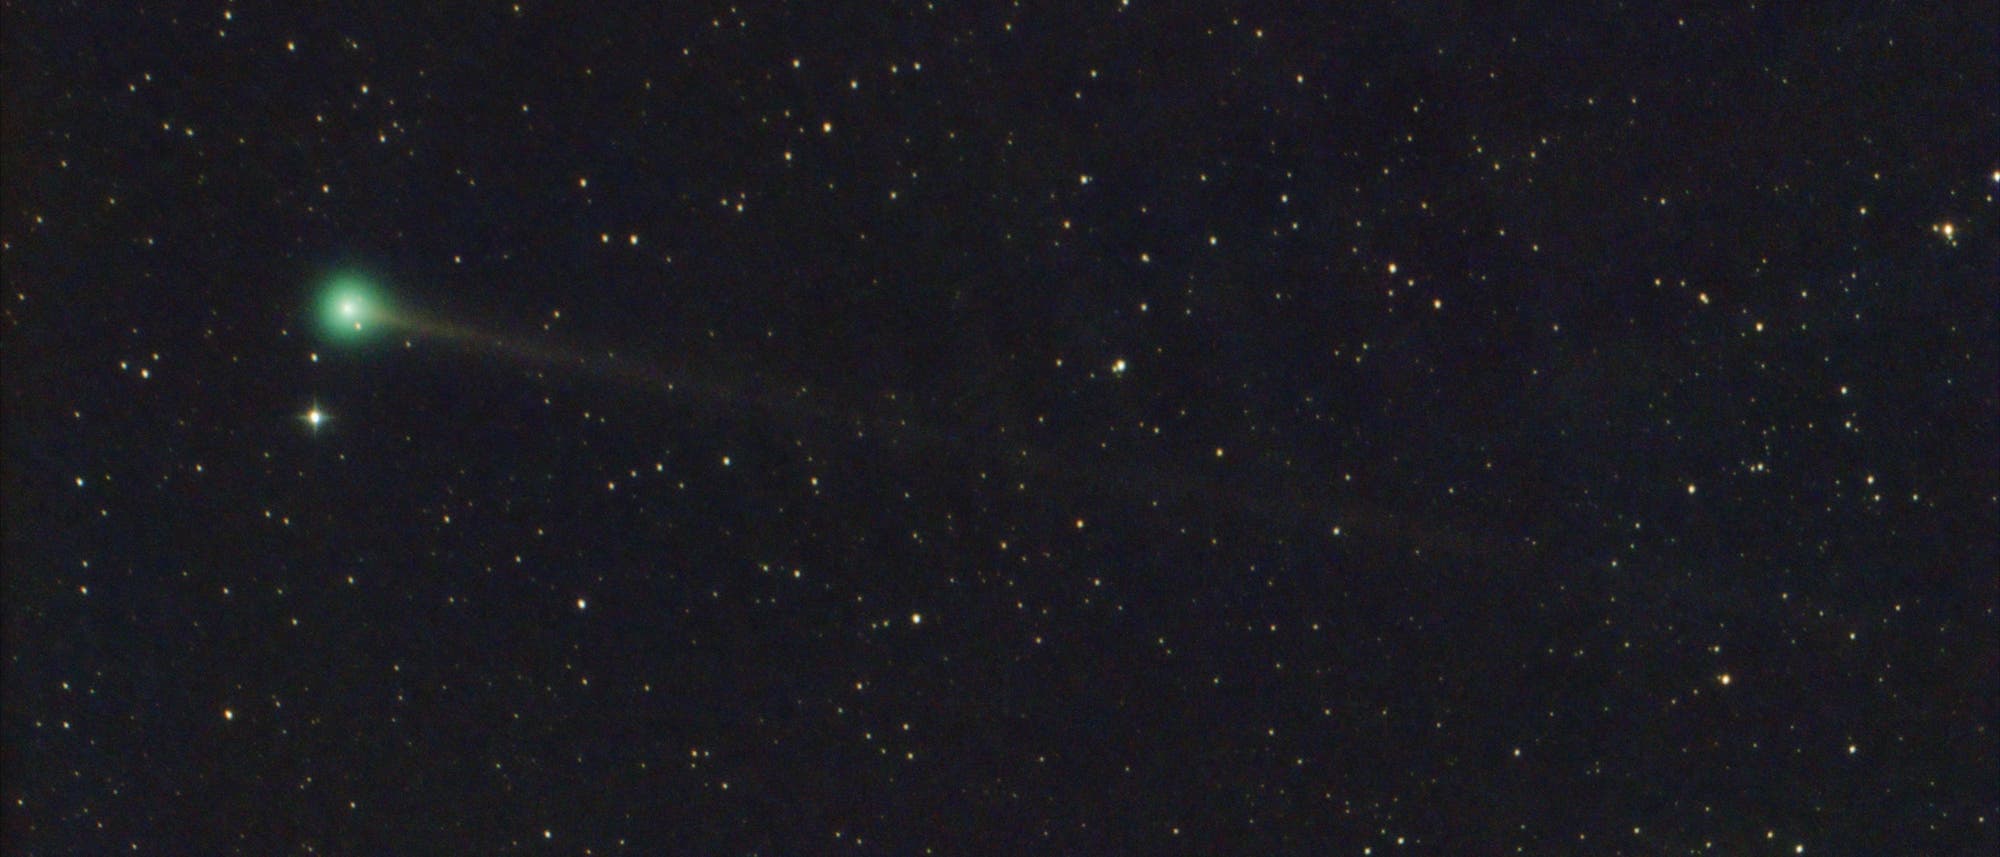 Komet 45P/Honda-Mrkos-Pajdusakova am 5. Januar 2017